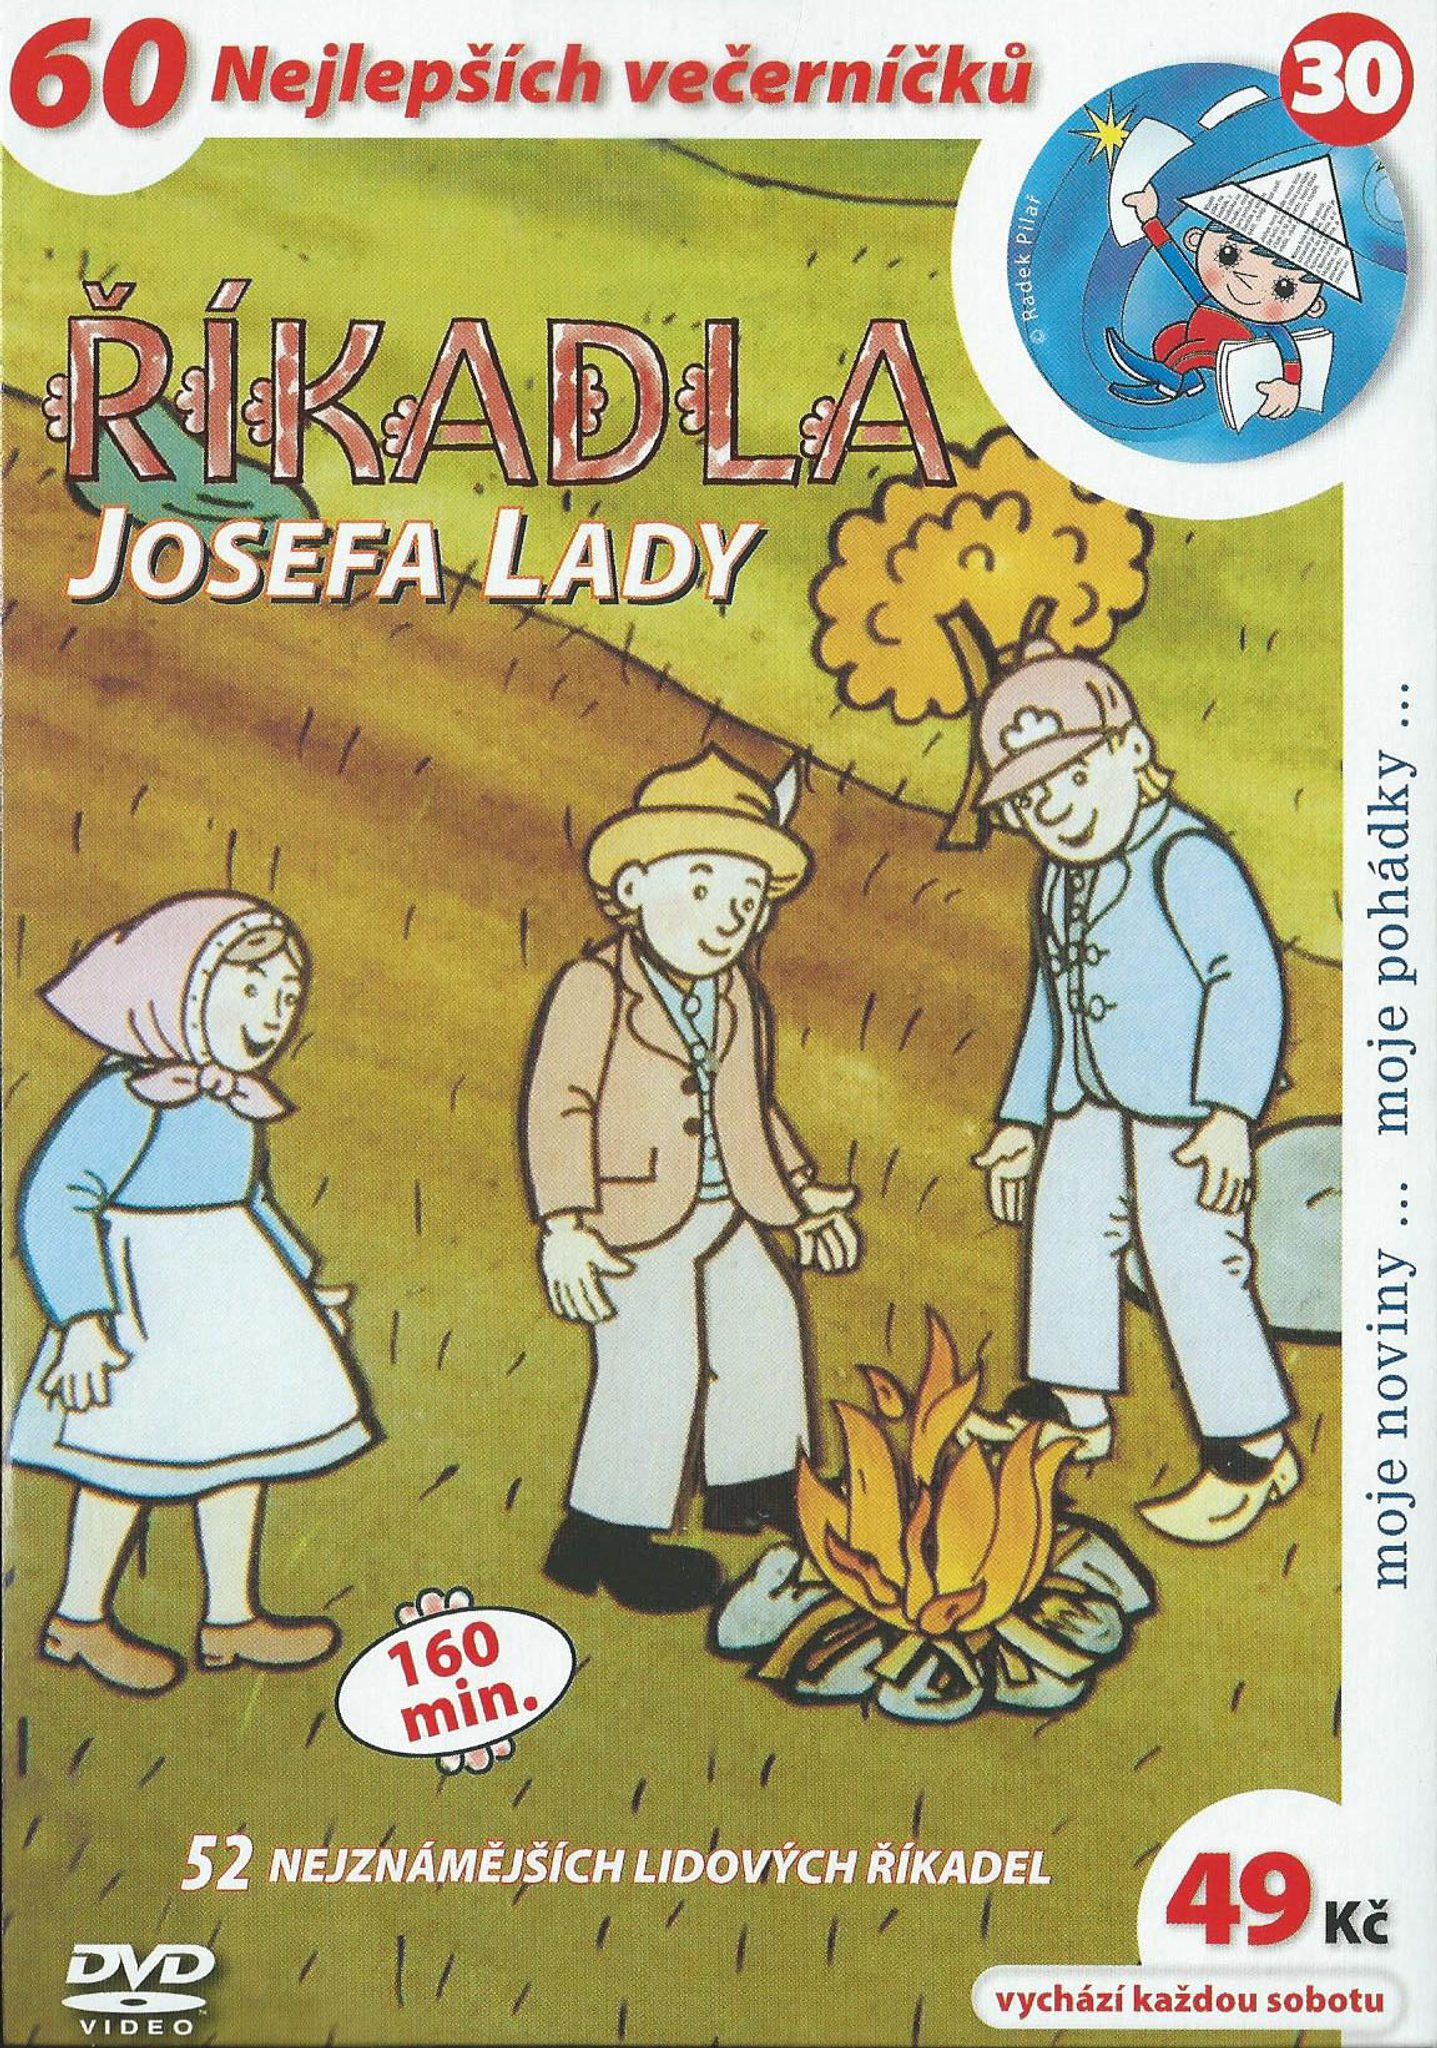 DVD kadla Josefa Lady